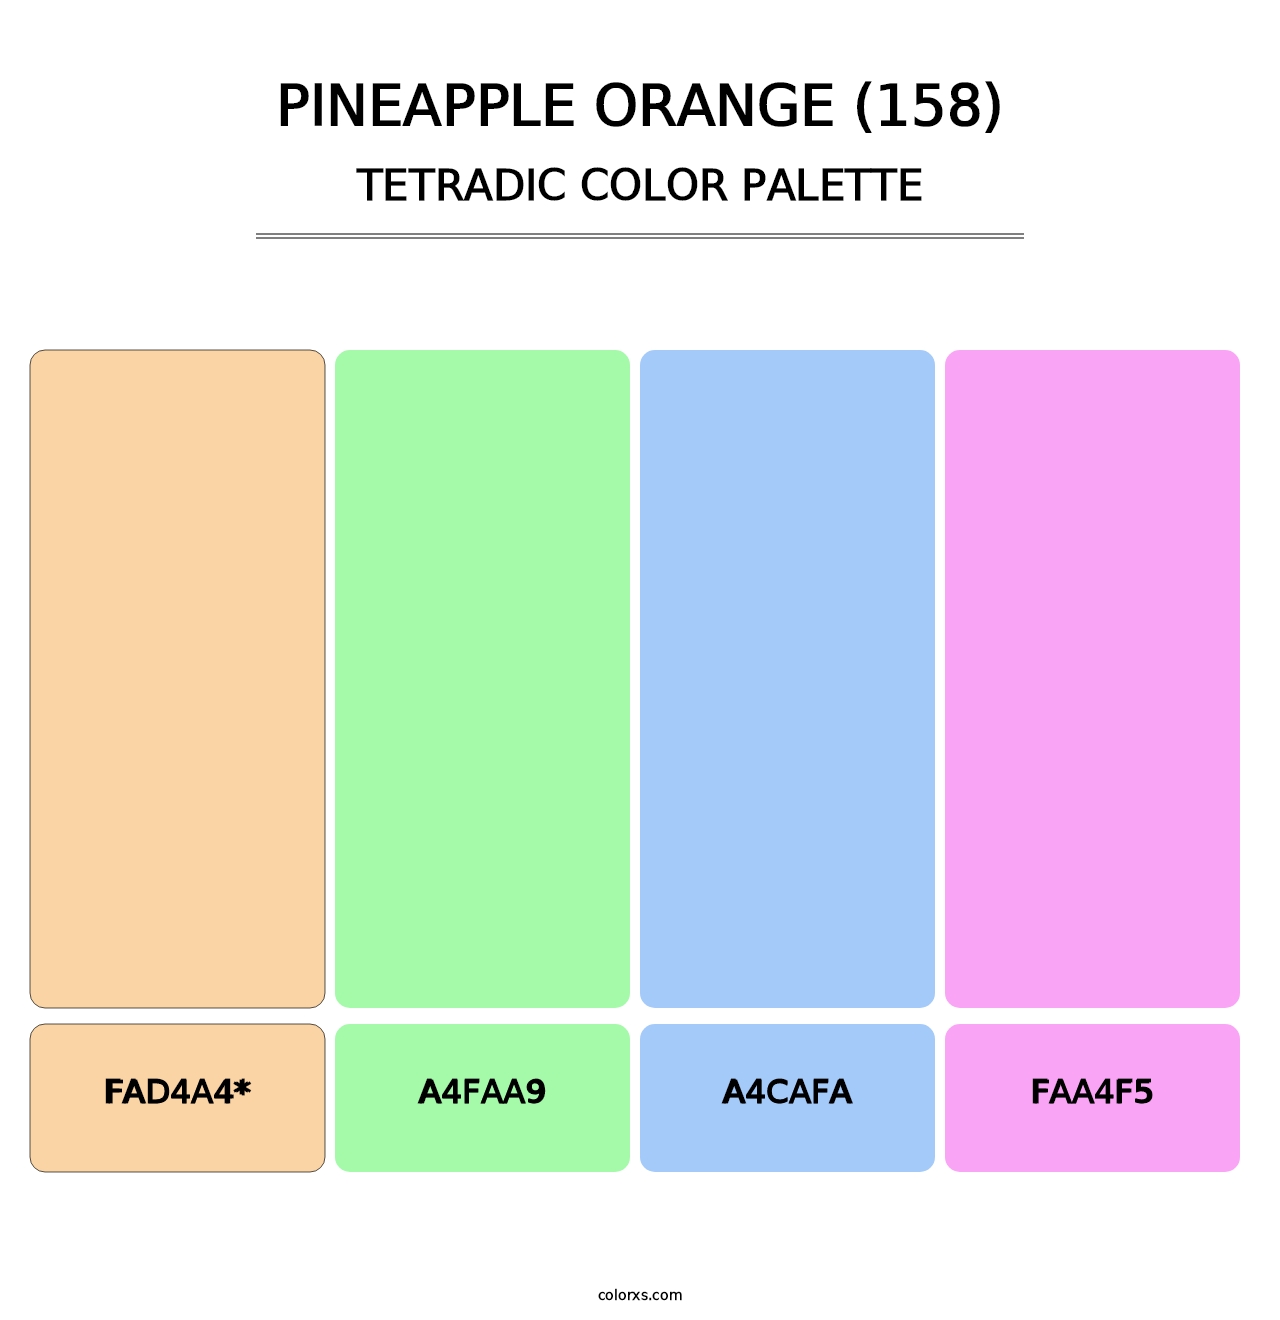 Pineapple Orange (158) - Tetradic Color Palette